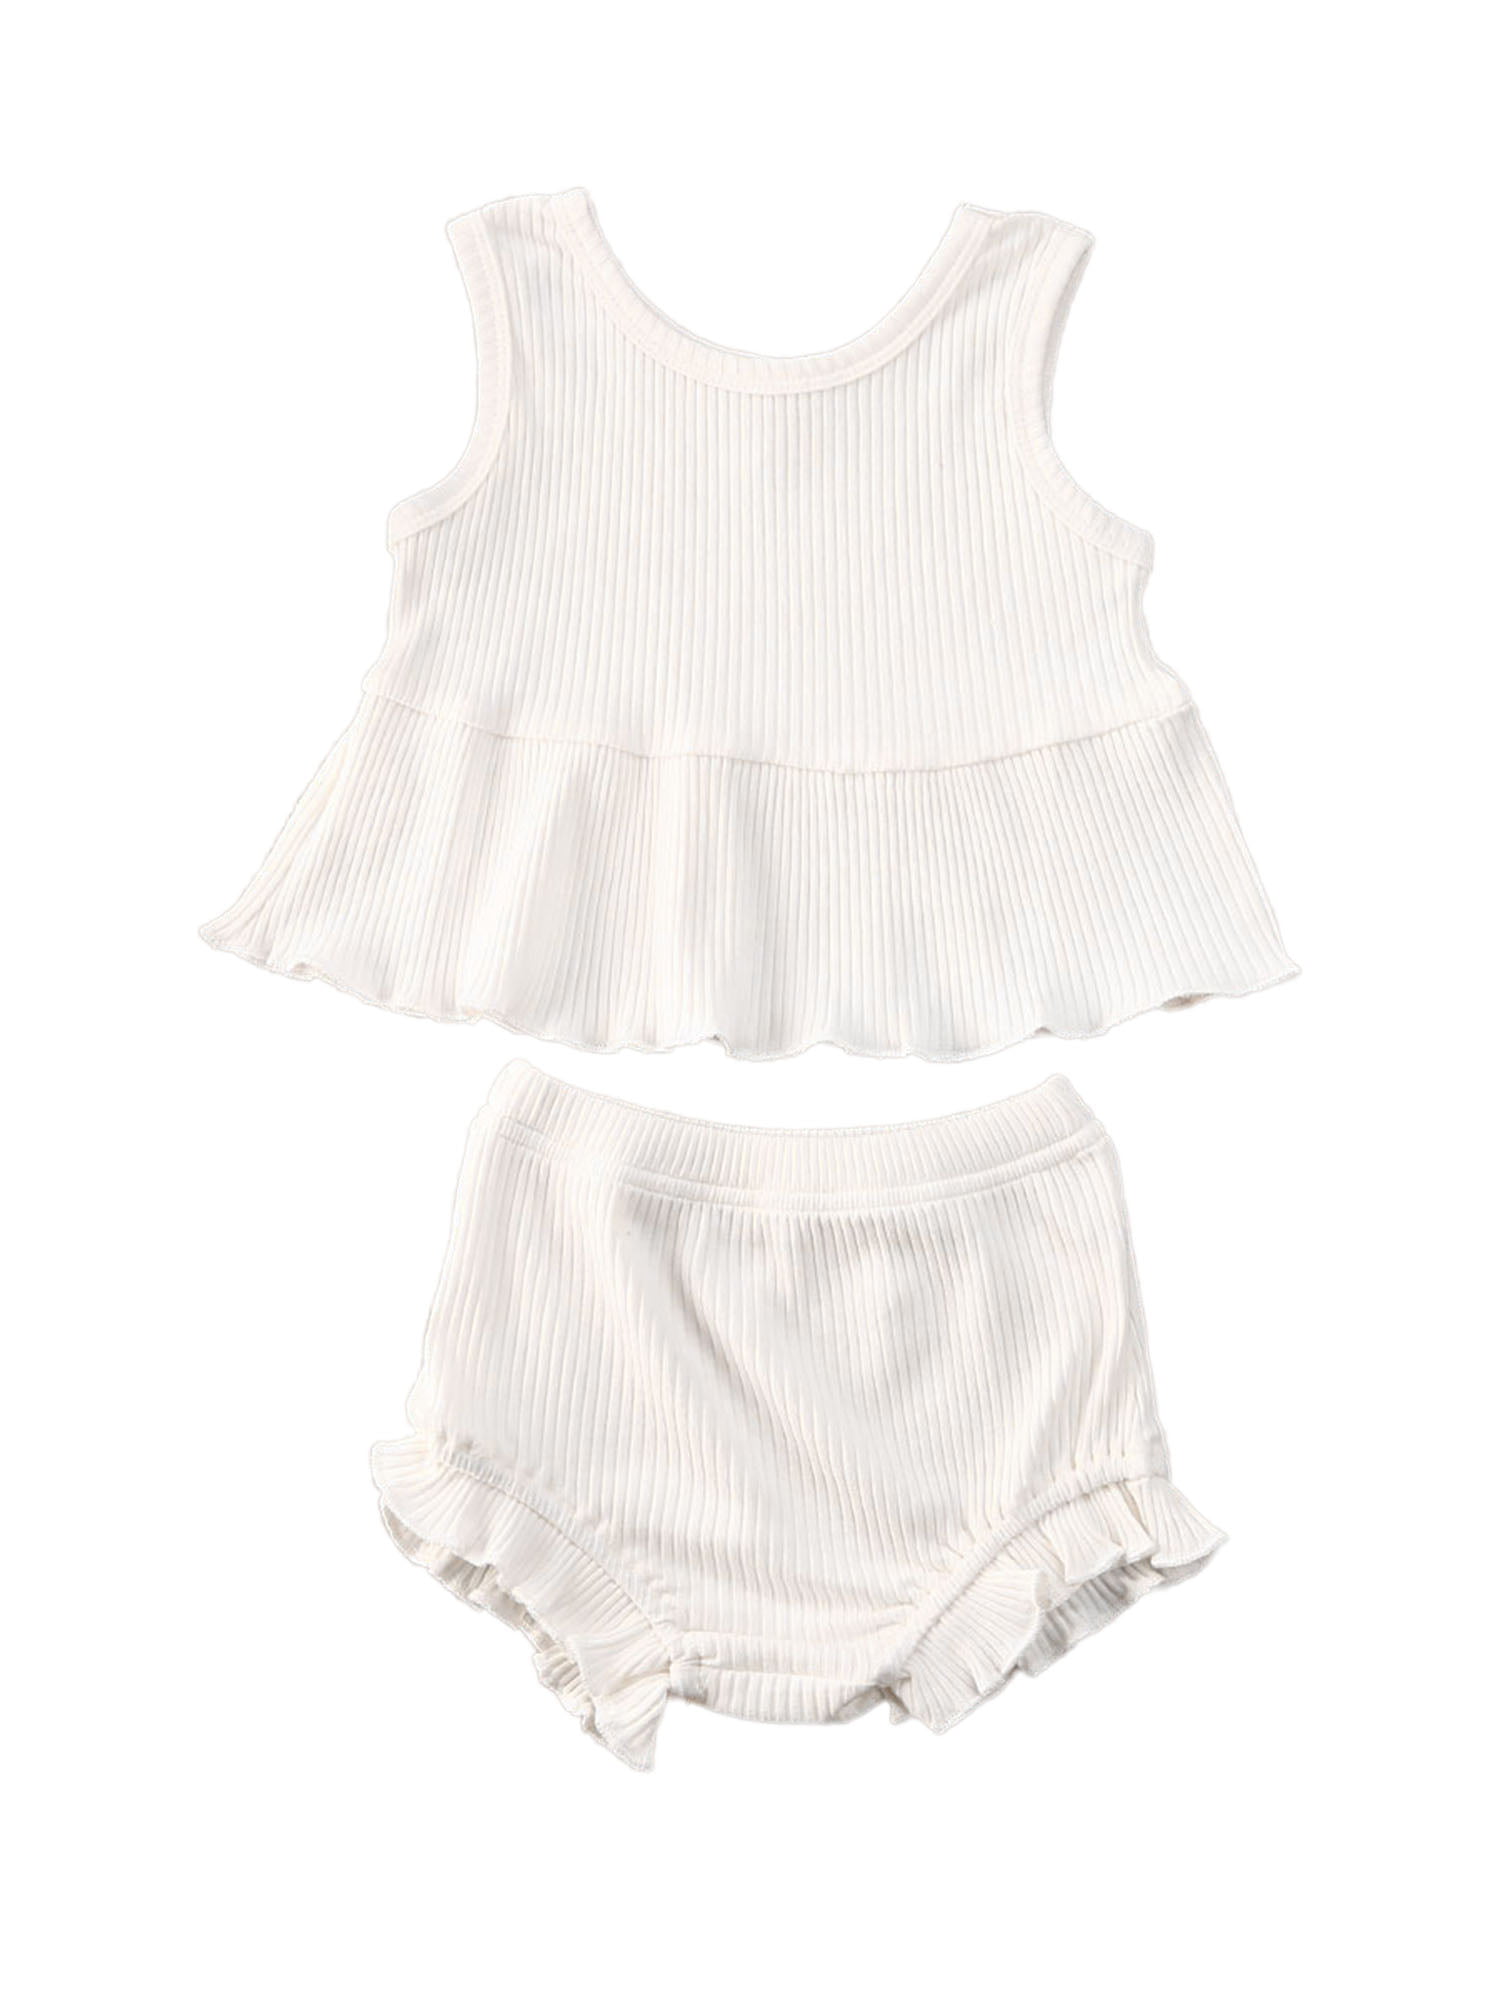 Bloomer Short Pants Set with 2 Pockets Toddler Newborn Girls Floral Clothes Set Ruffle Sleeveless Dress Tops Shirt